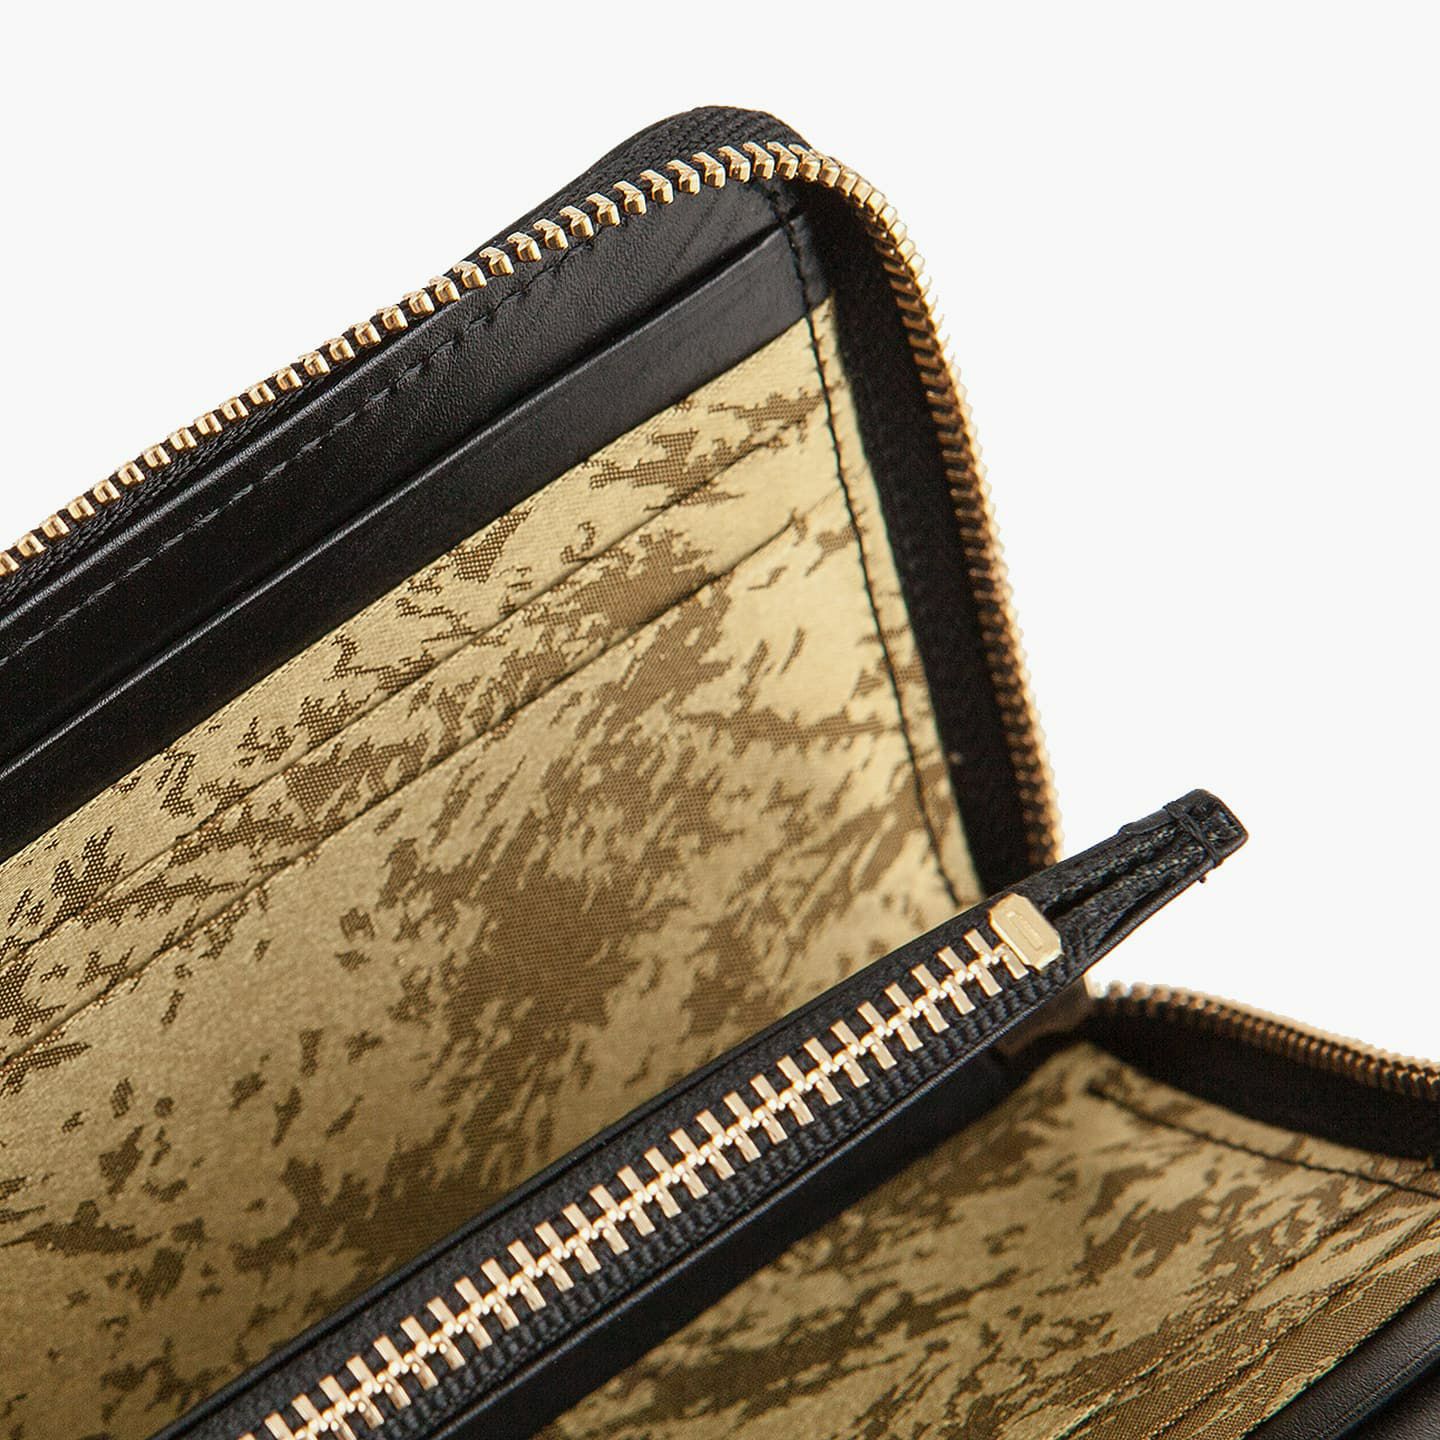 L字ジップ長財布（フレイムダンス） | メンズの財布･ 長財布 など拘りの日本製ブランドなら Mens Leather Store